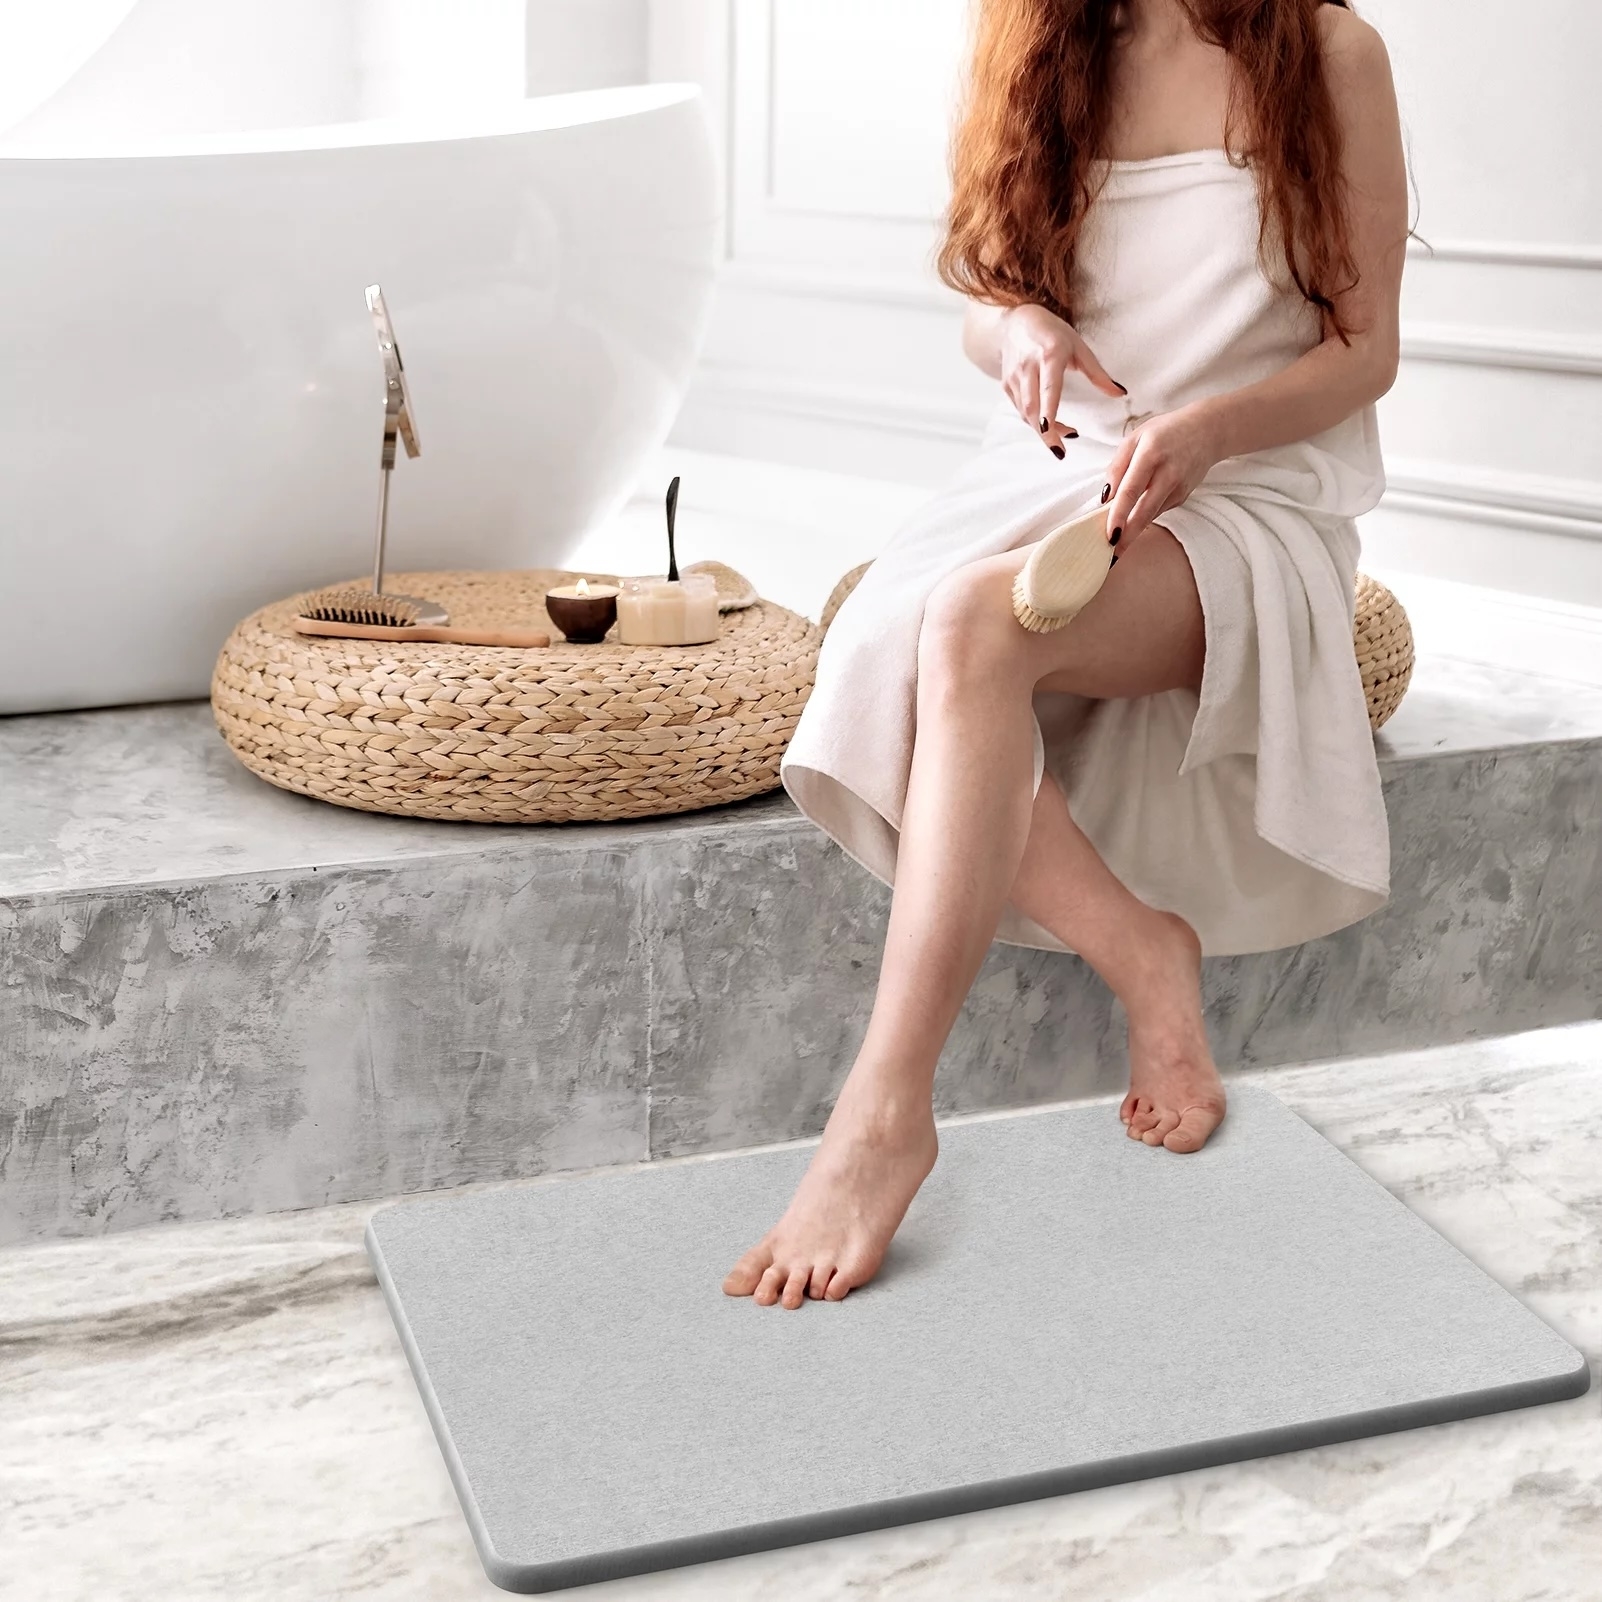 model sitting on a step next to a bath rub and stepping on a stone bath mat